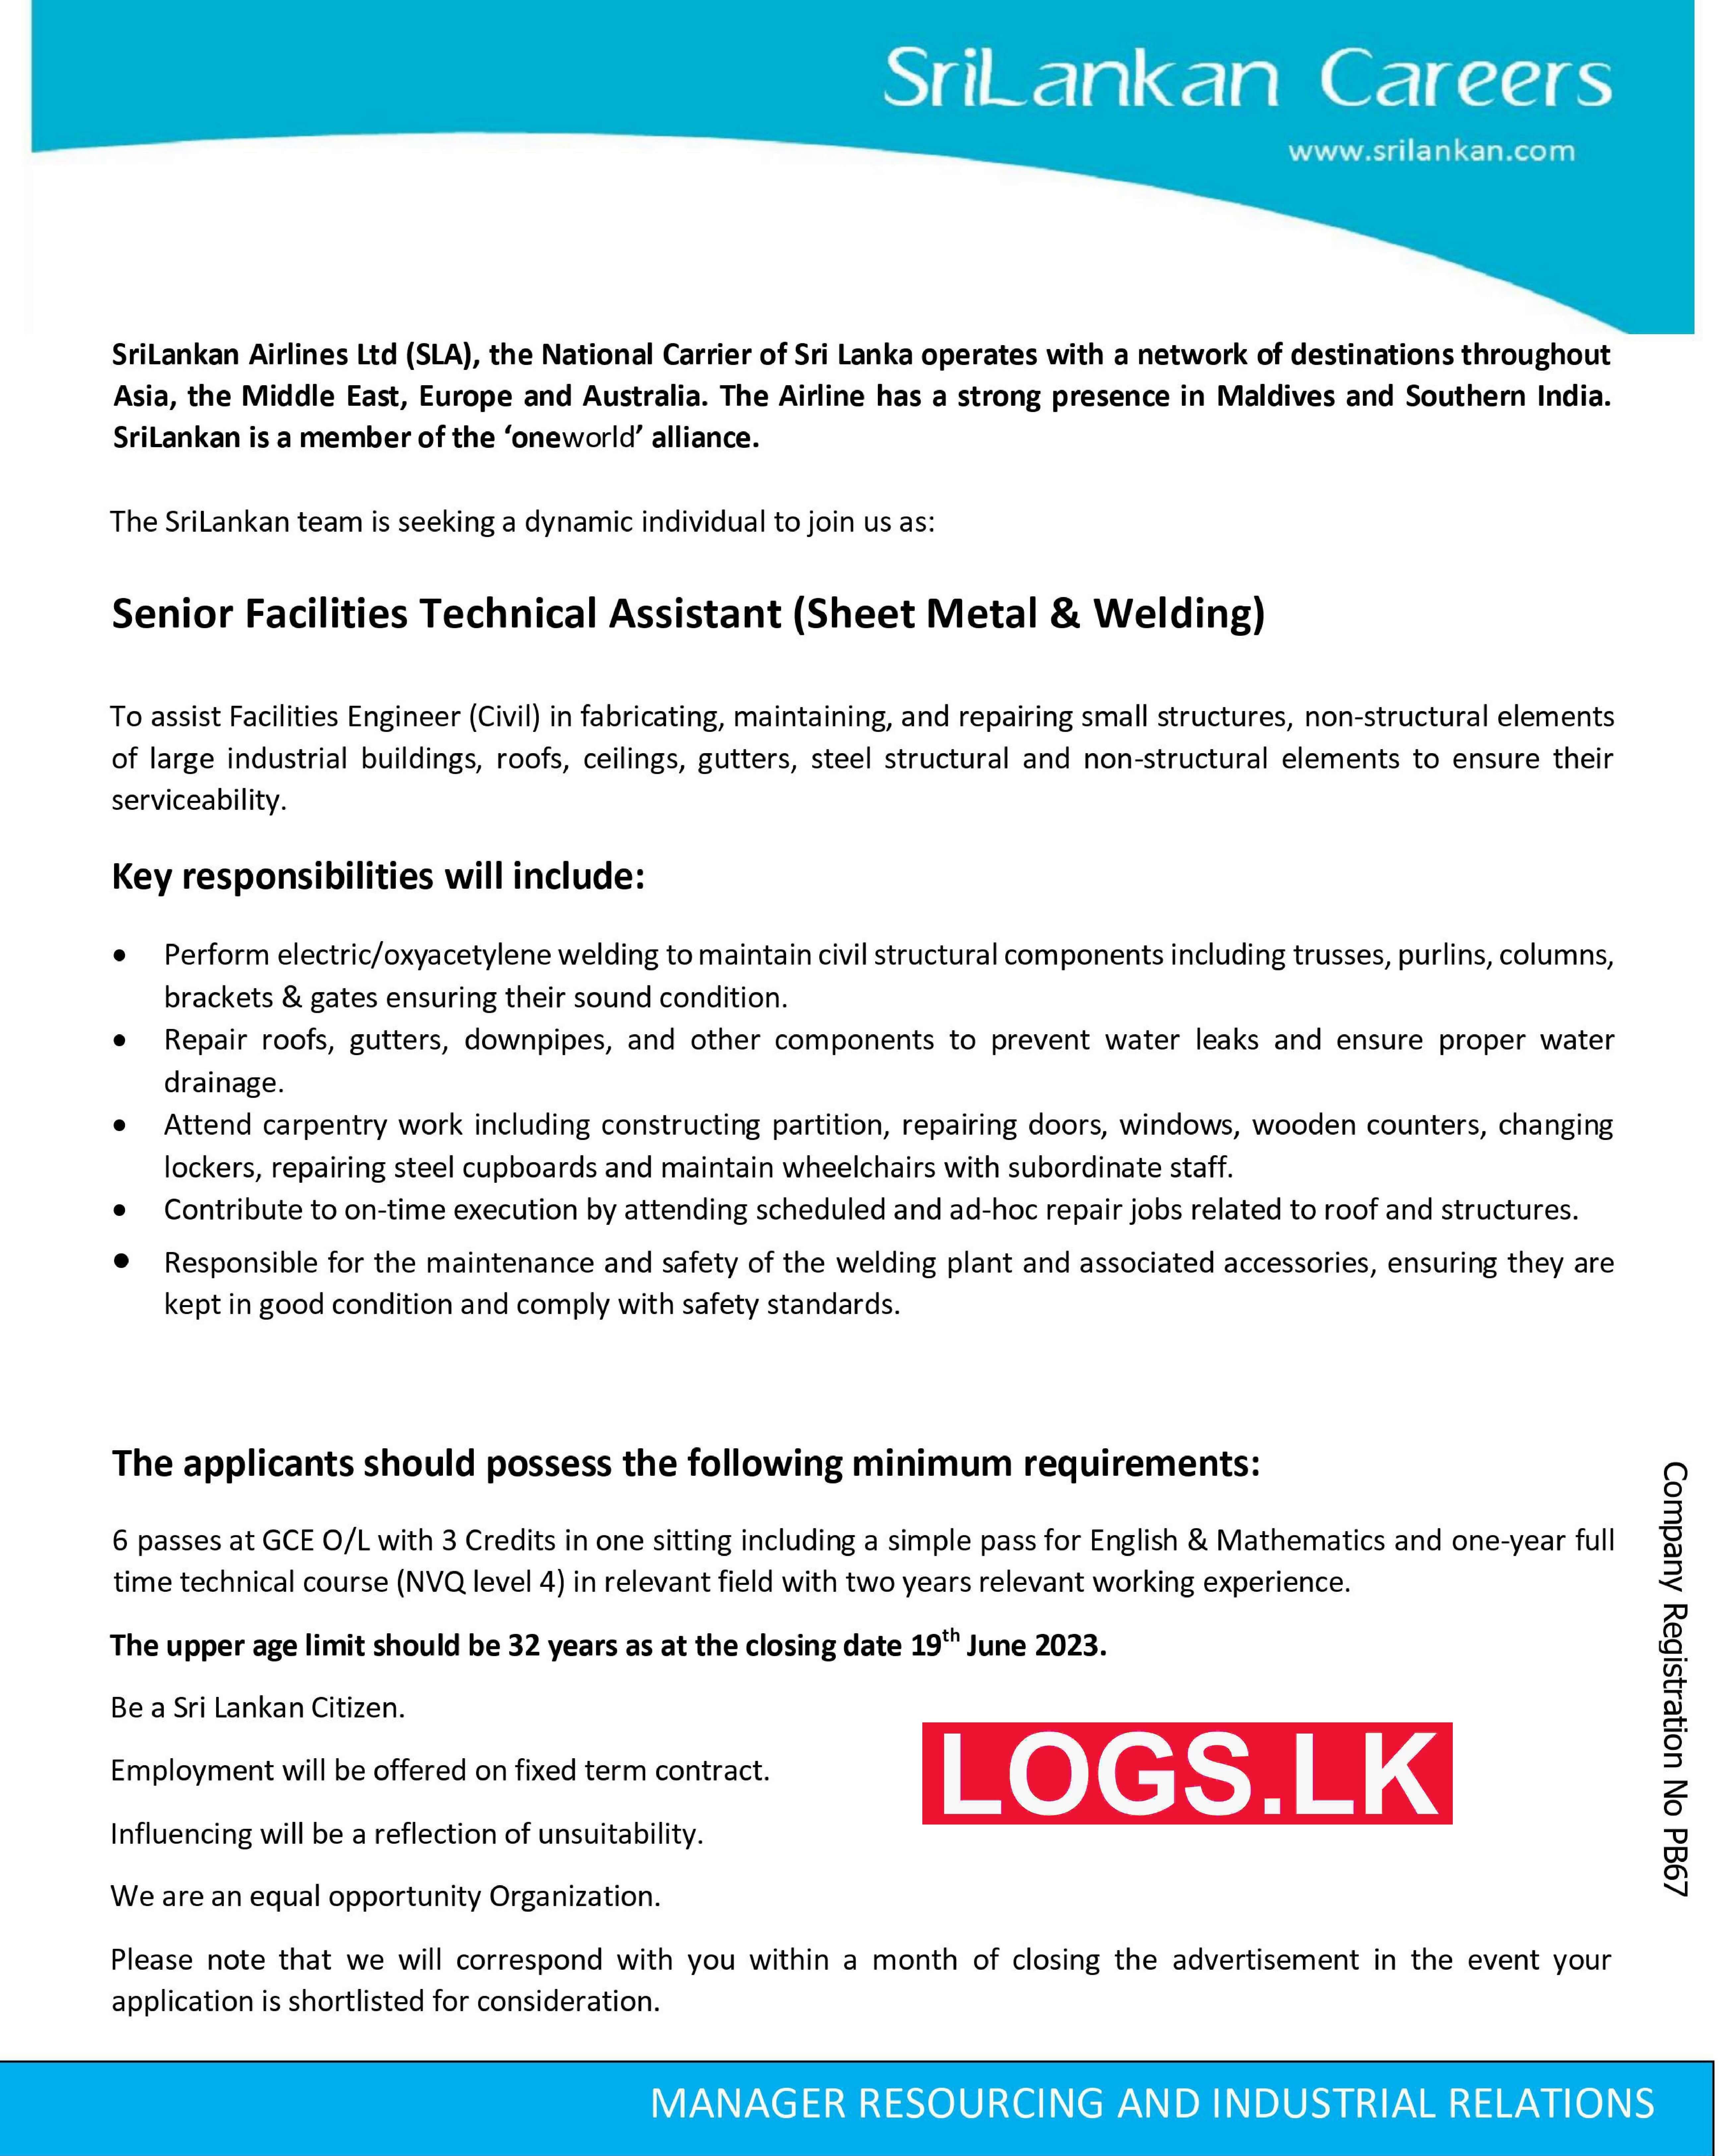 Senior Facilities Technical Assistant - Sri Lankan Airlines Vacancies 2023 Application Form, Details Download